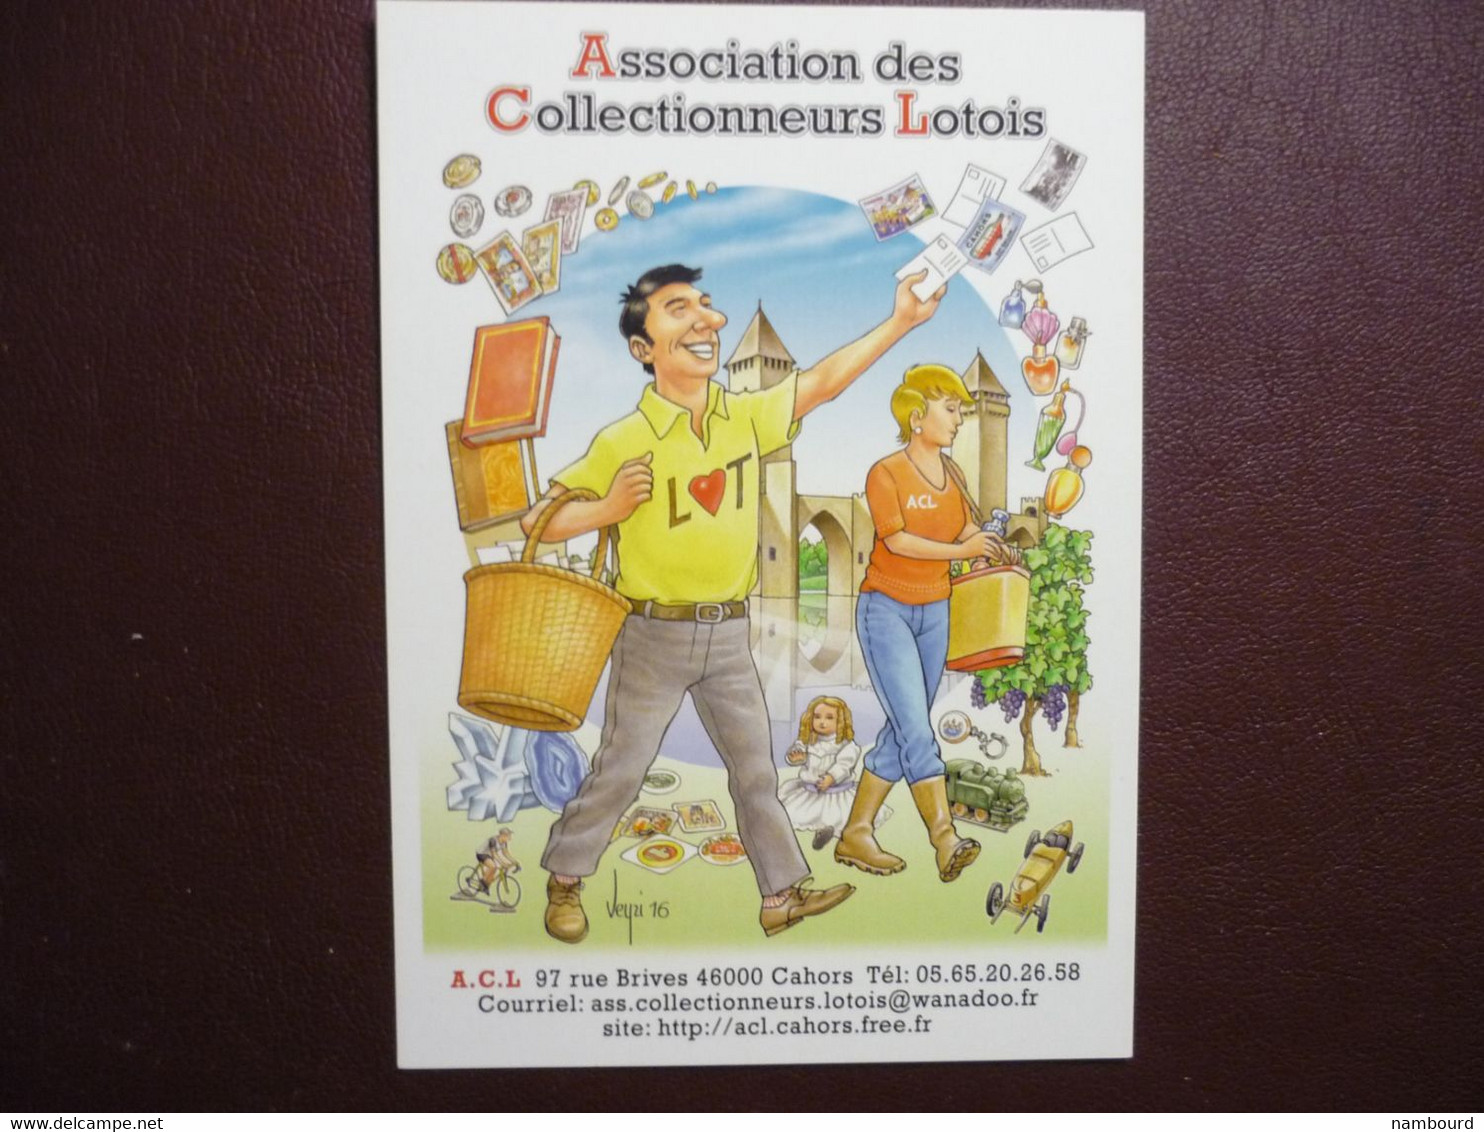 Association Des Collectionneurs Lotois - Veyri, Bernard